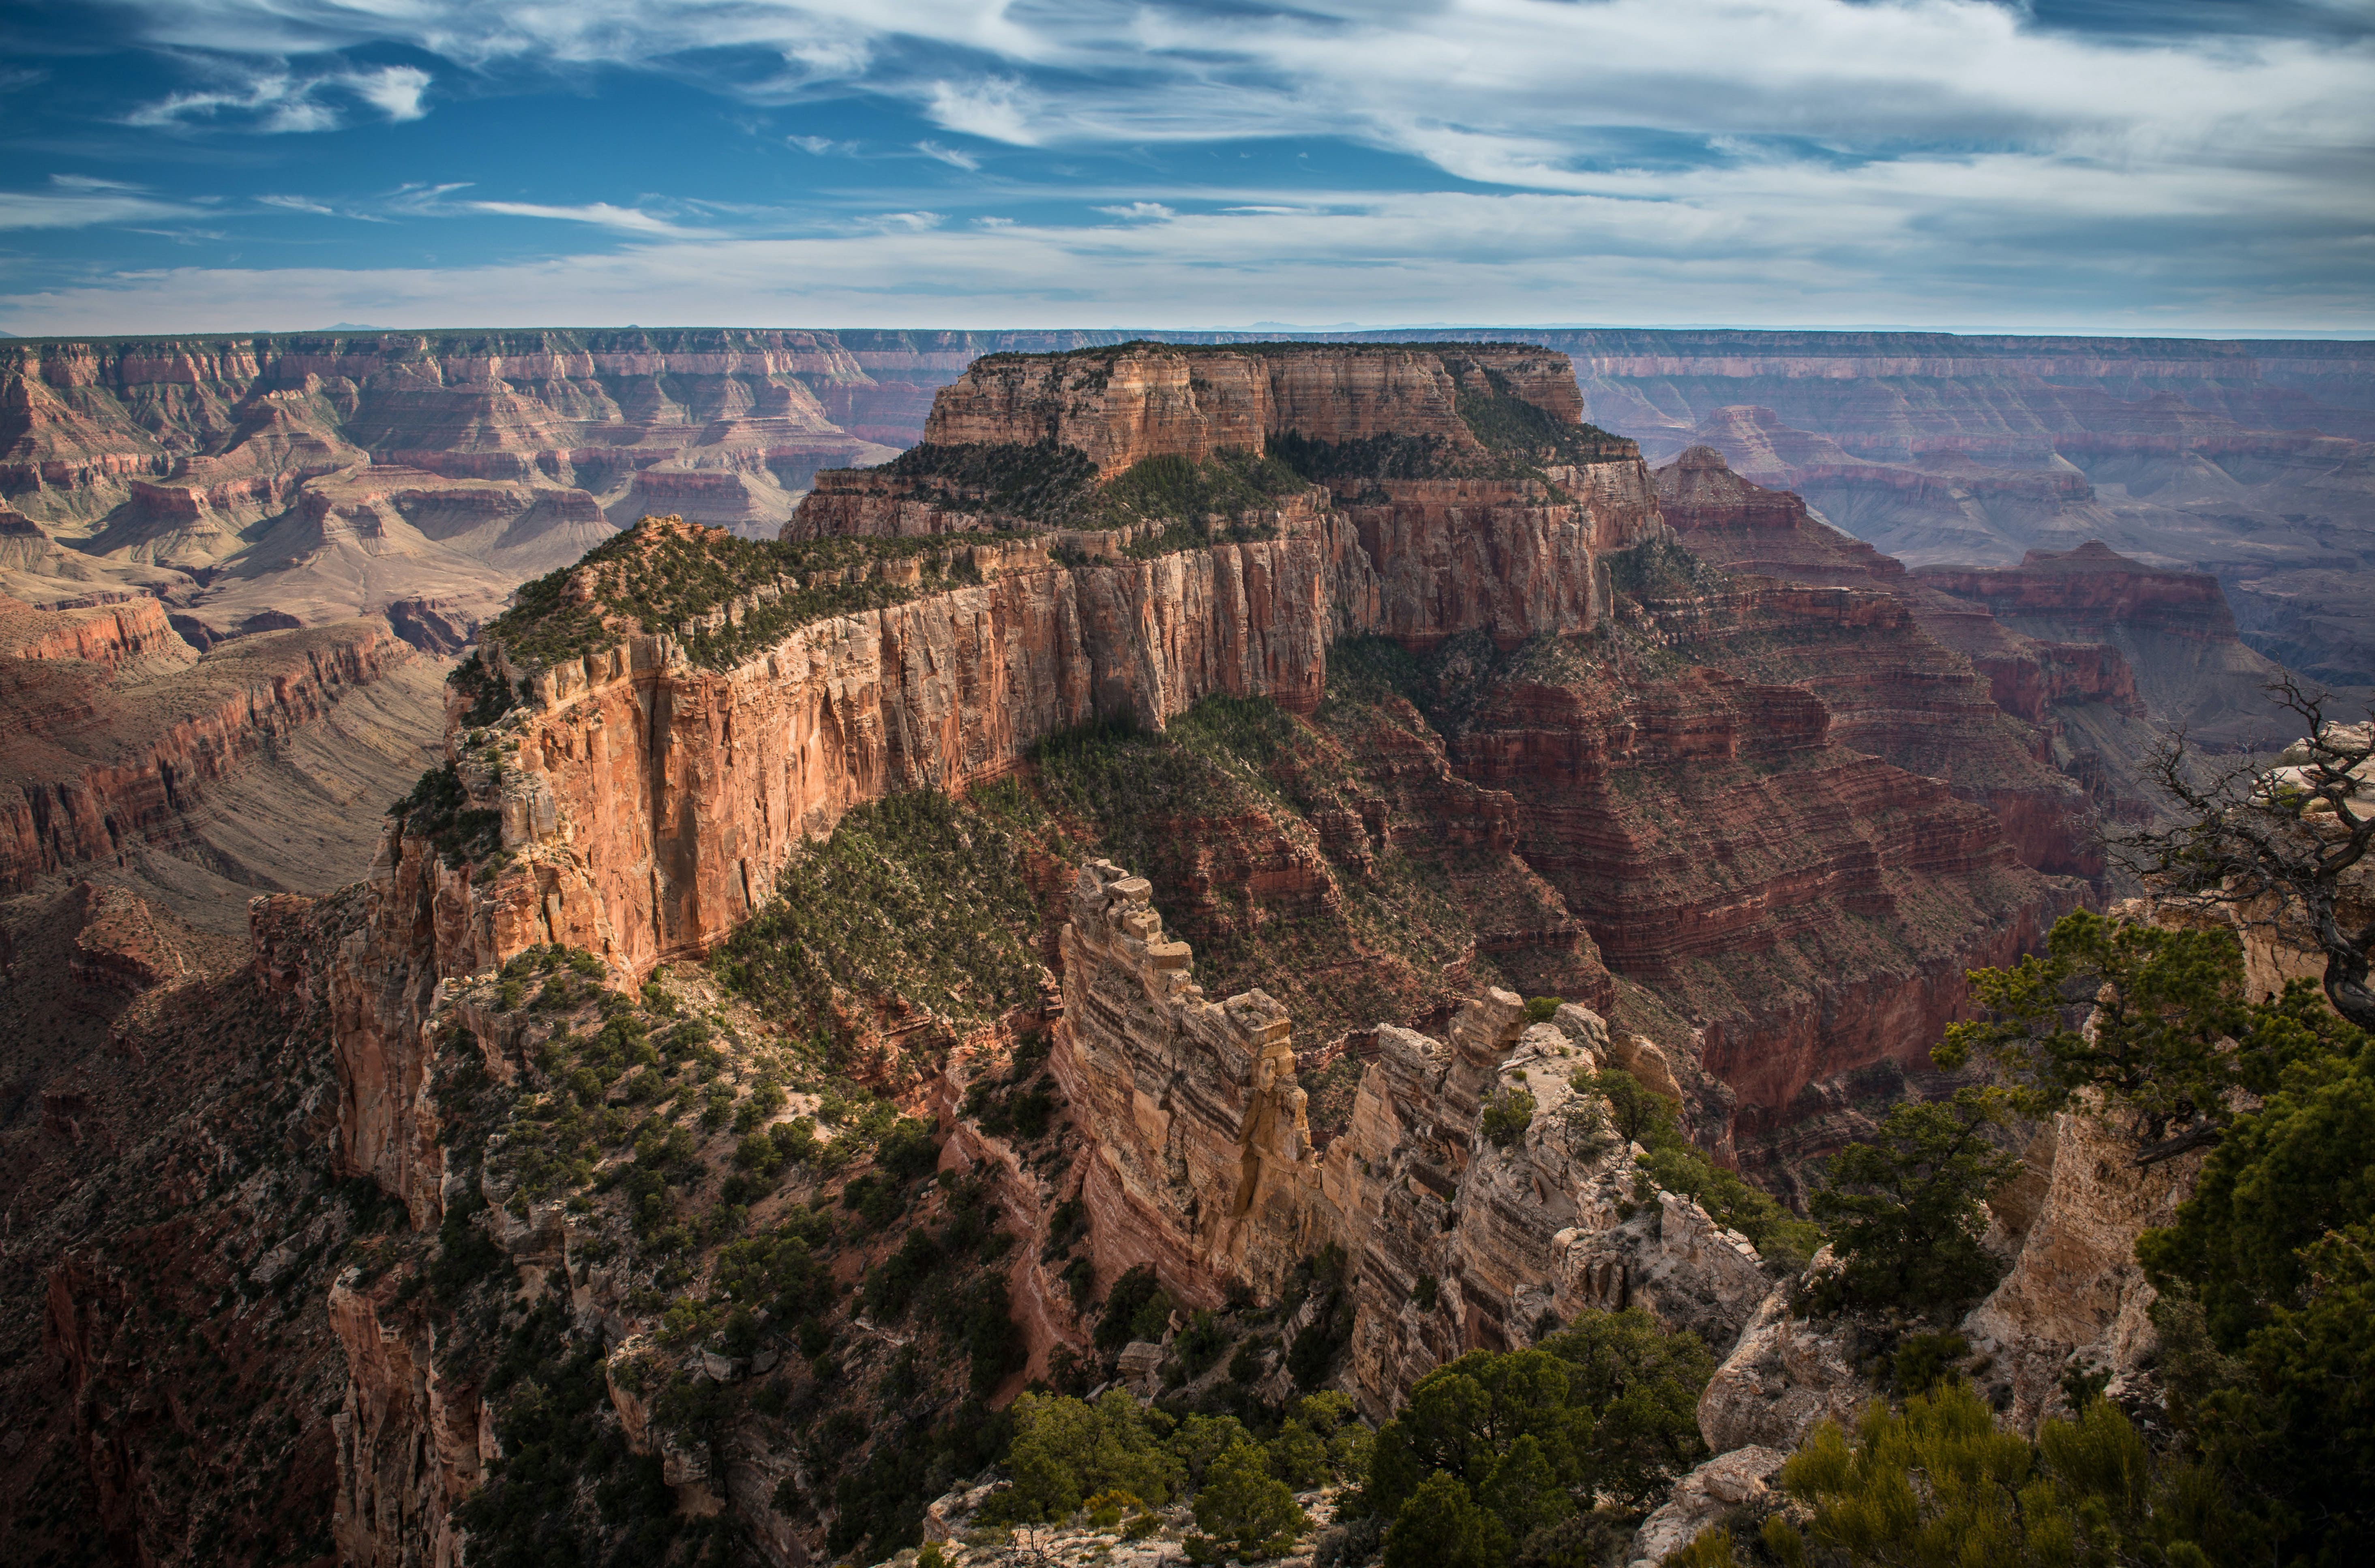 Taman Nasional Grand Canyon Rim Utara 